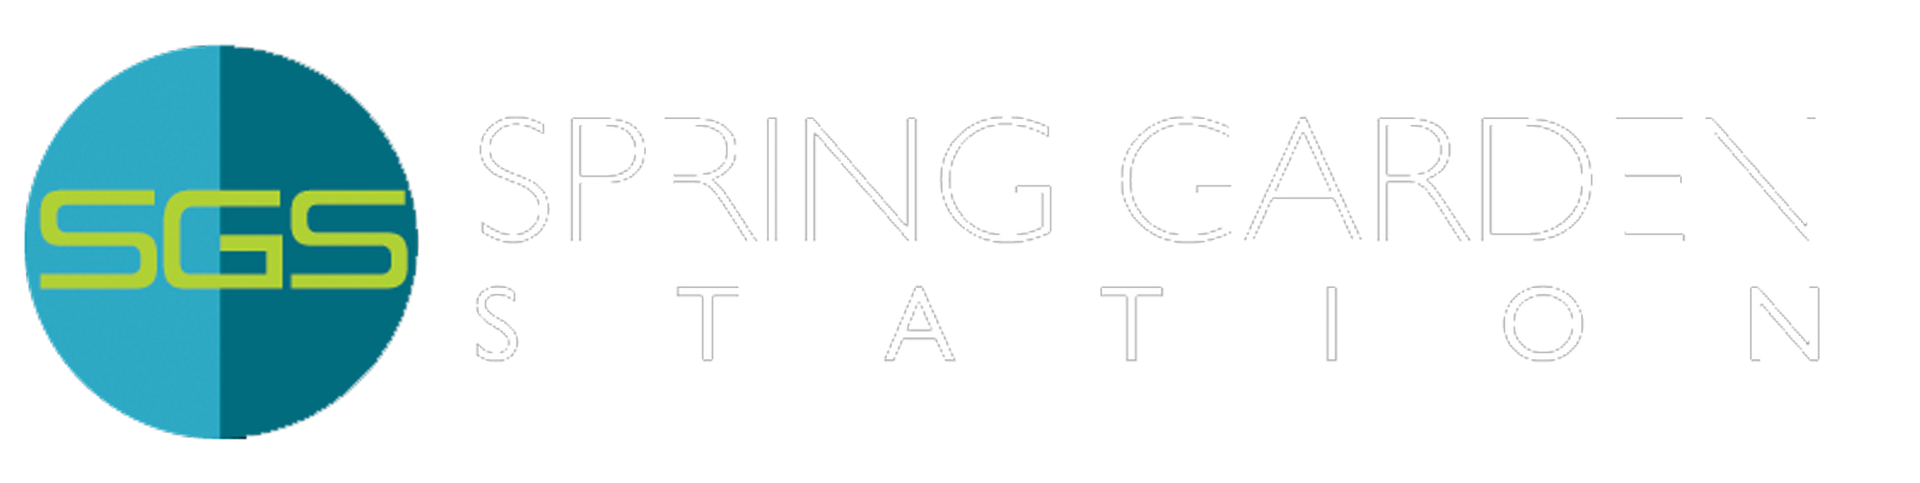 Spring Garden Station Logo - Footer, go to home